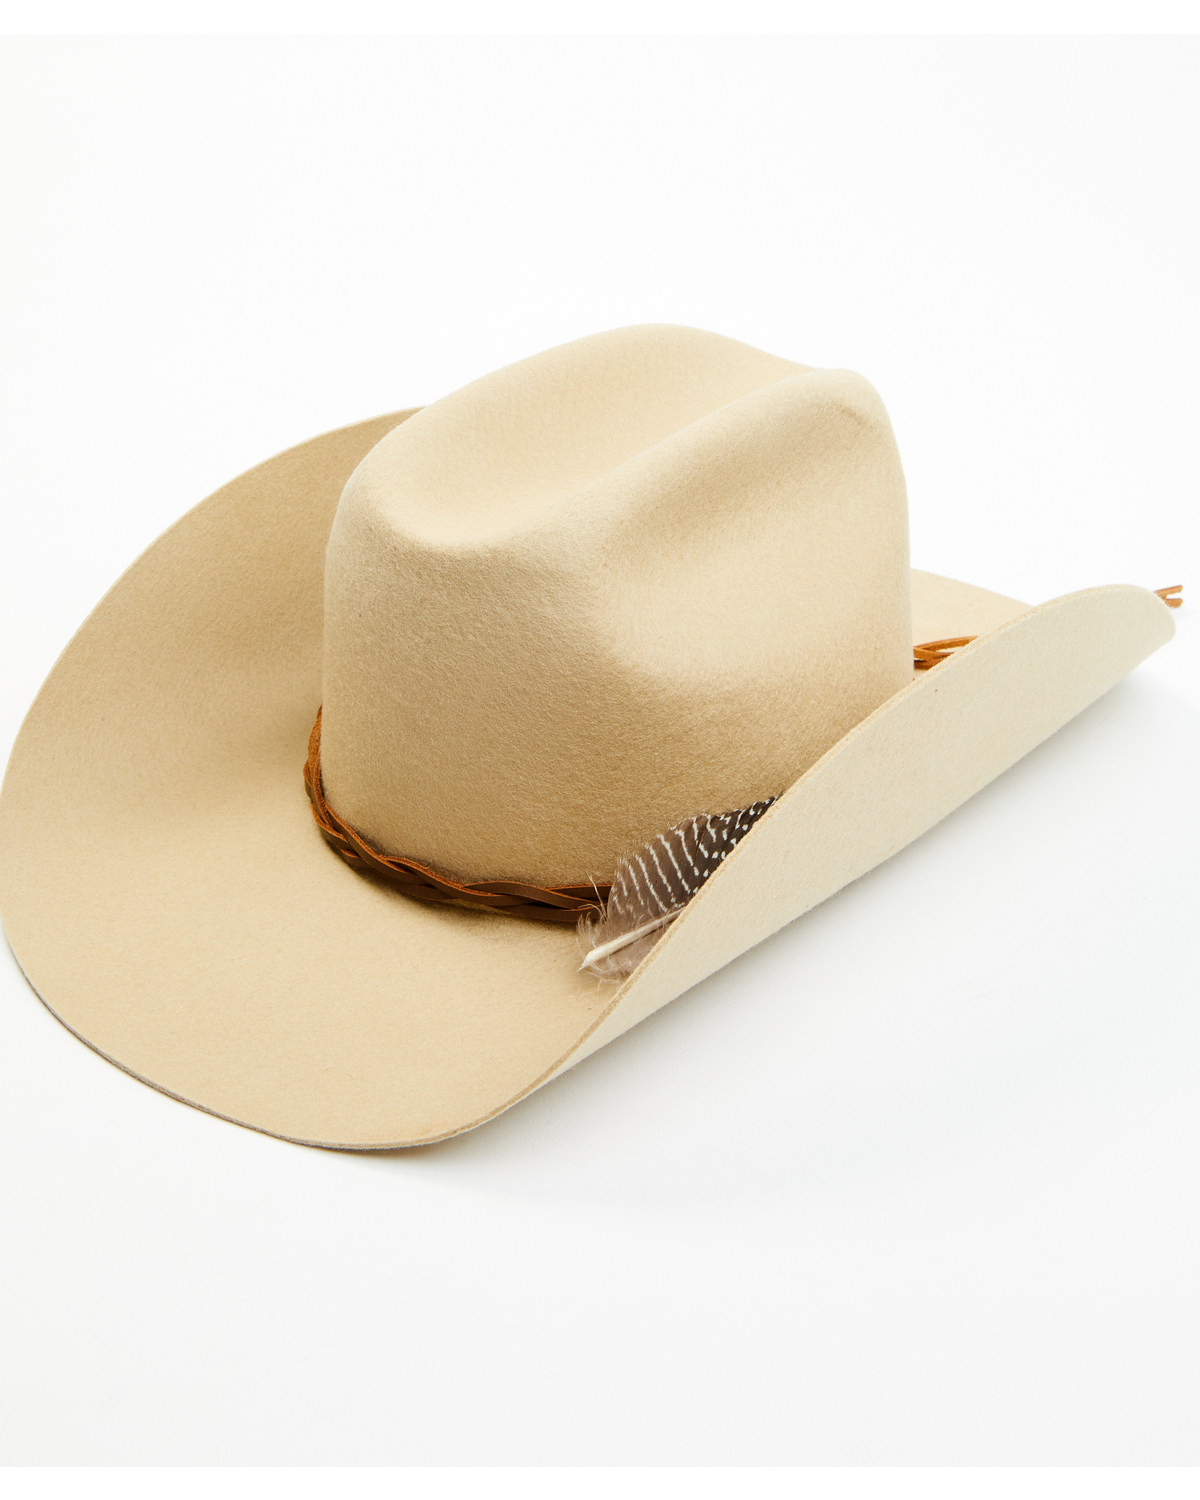 Idyllwind Women's Dakota Avenue Felt Cowboy Hat